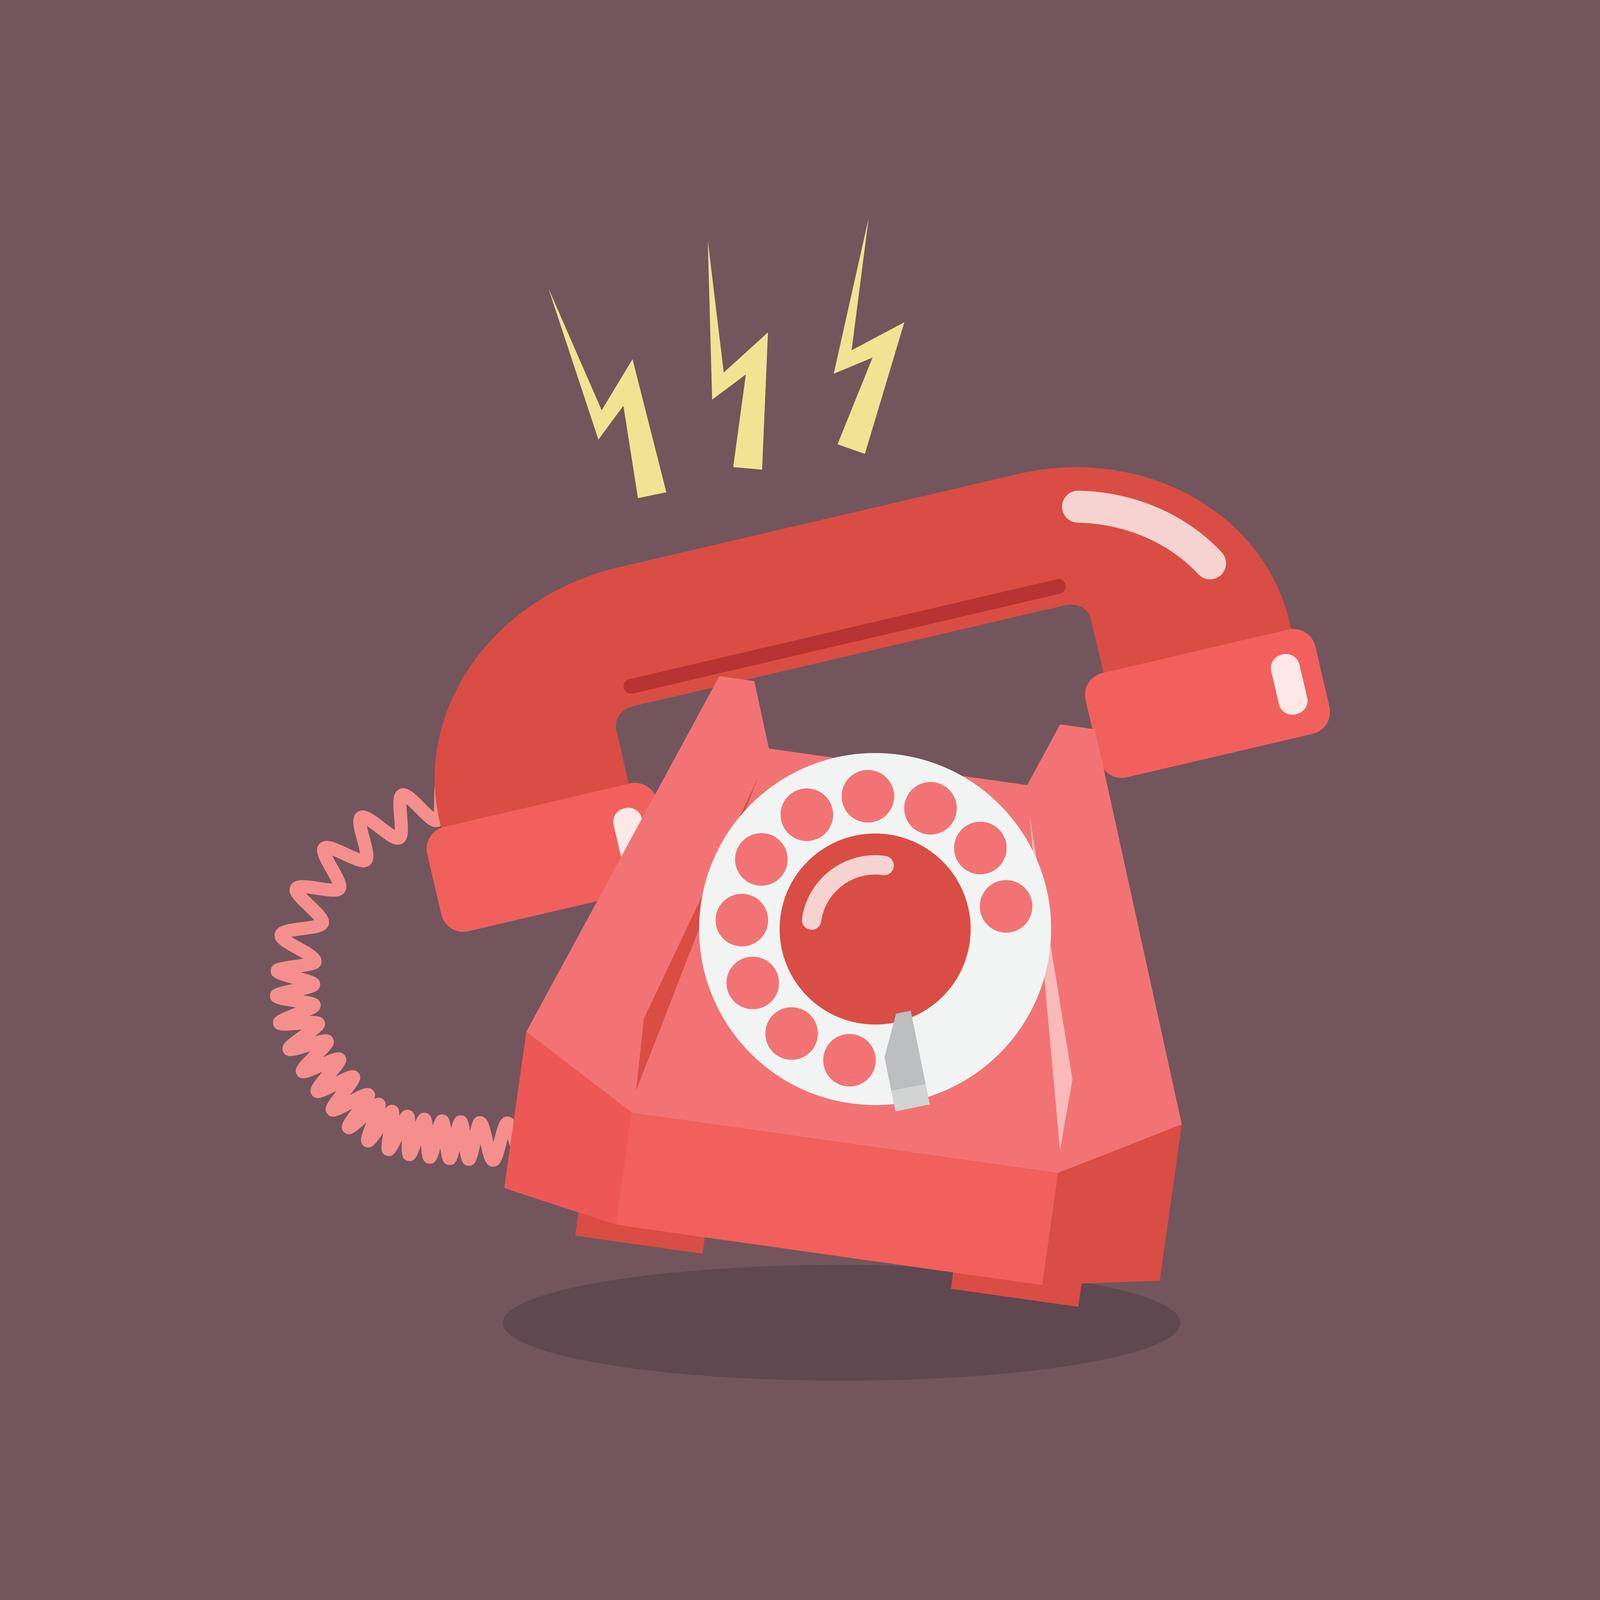 Retro Dial Telephone are Ringing. Vector illustration